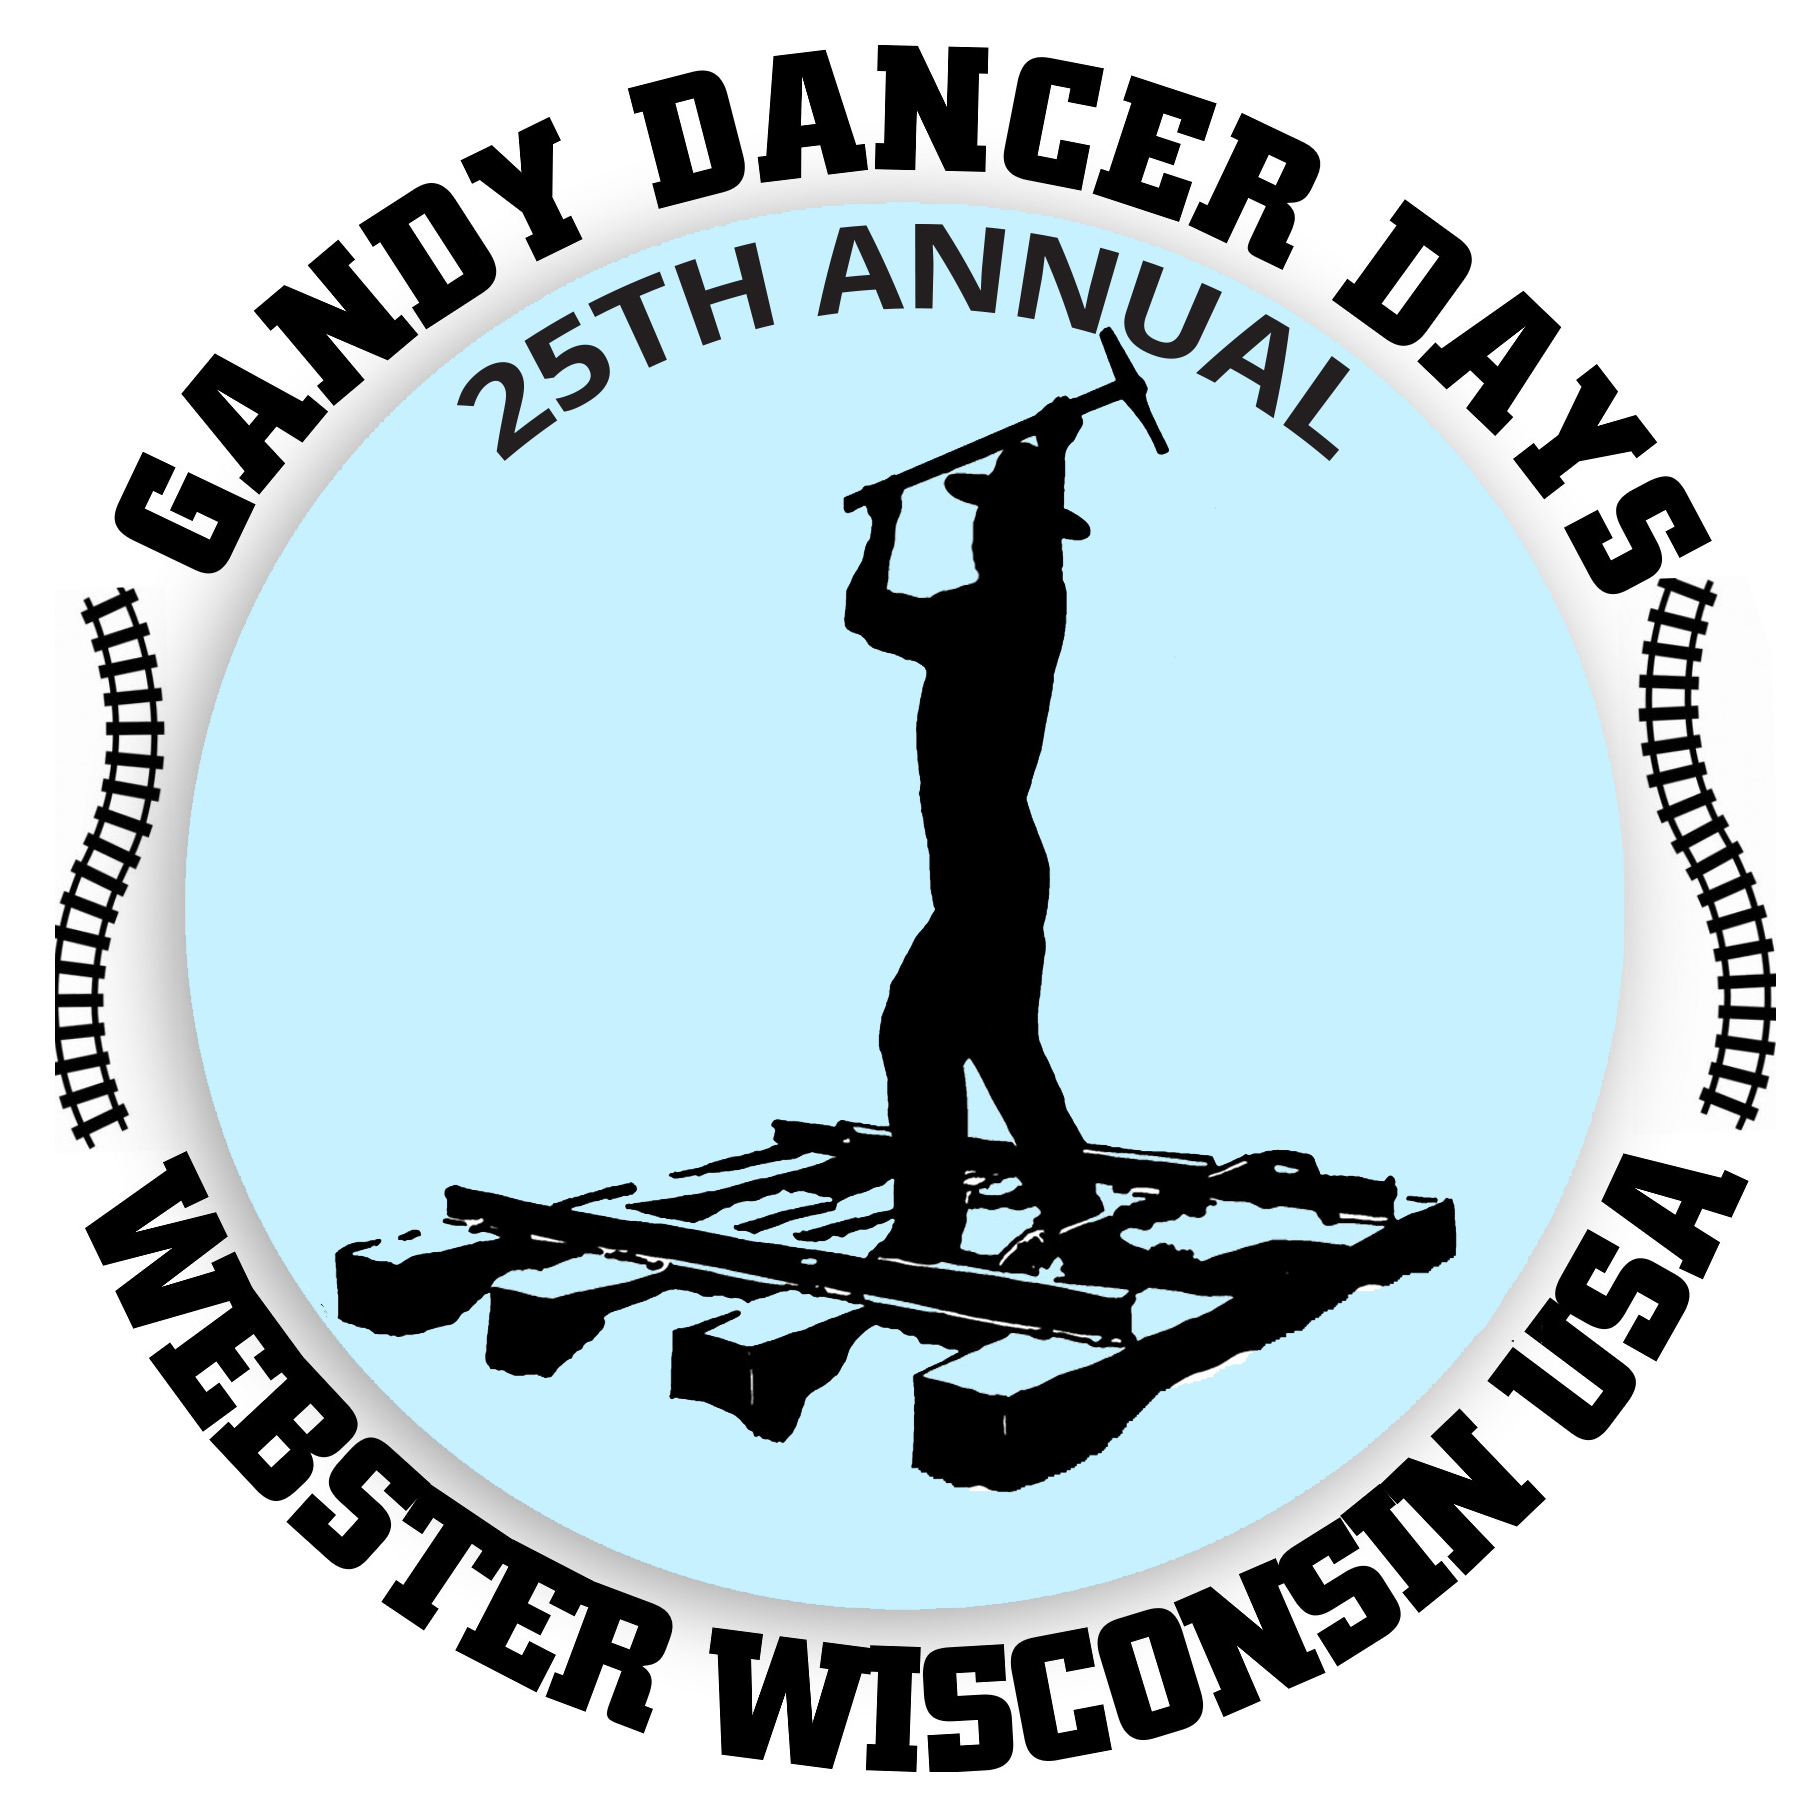 Gandy Dancer Days logo, 25th Annual, Webster, WI